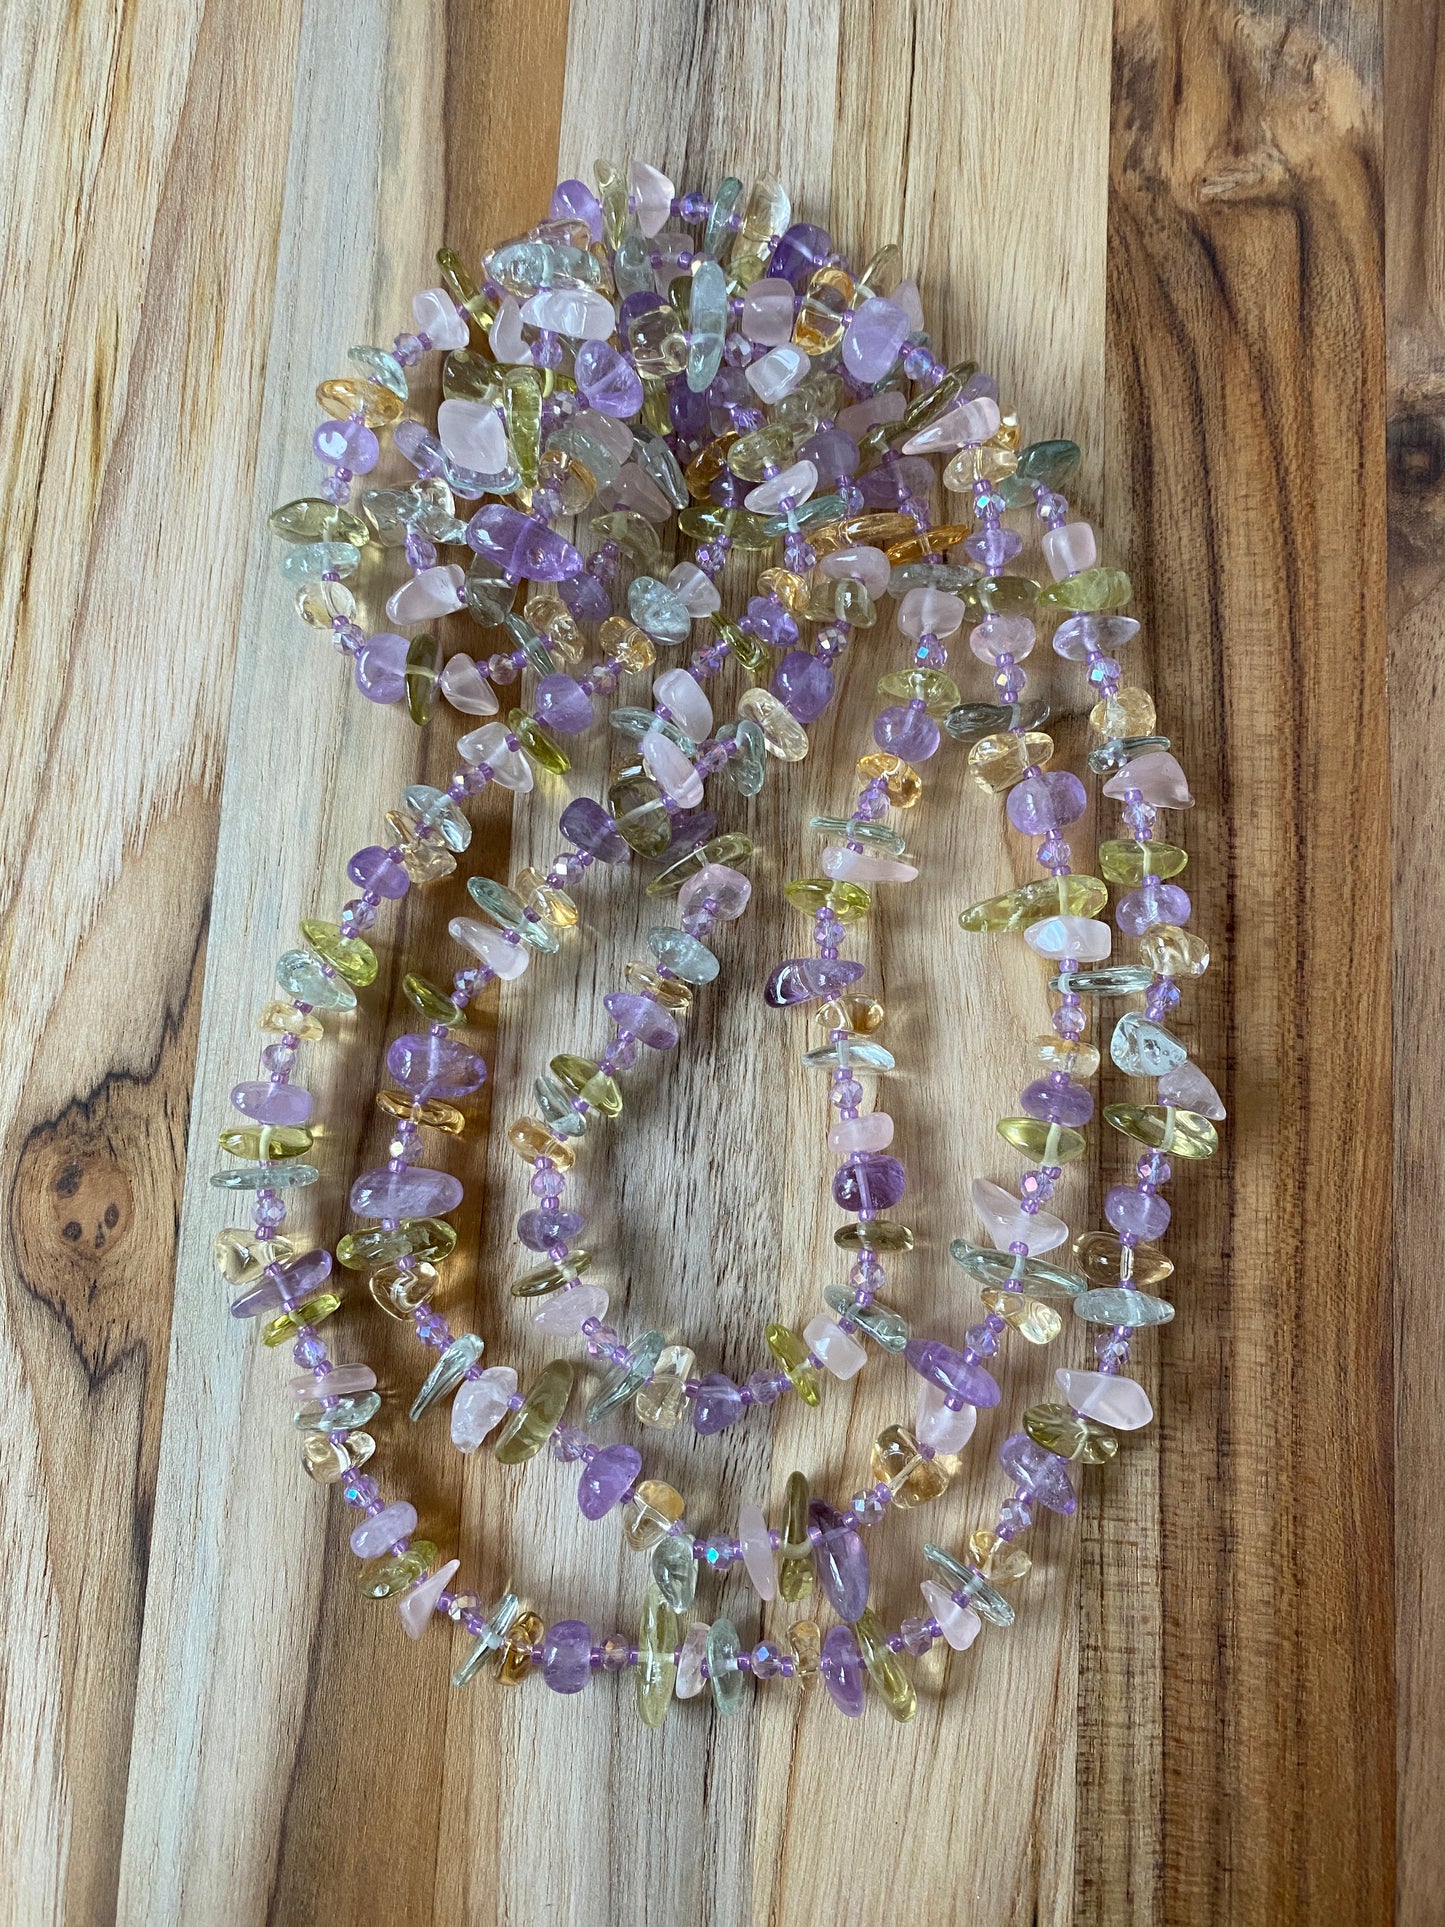 60" Extra Long Wraparound Multi Gemstone Tumble Chip Beaded Necklace with Crystal Beads